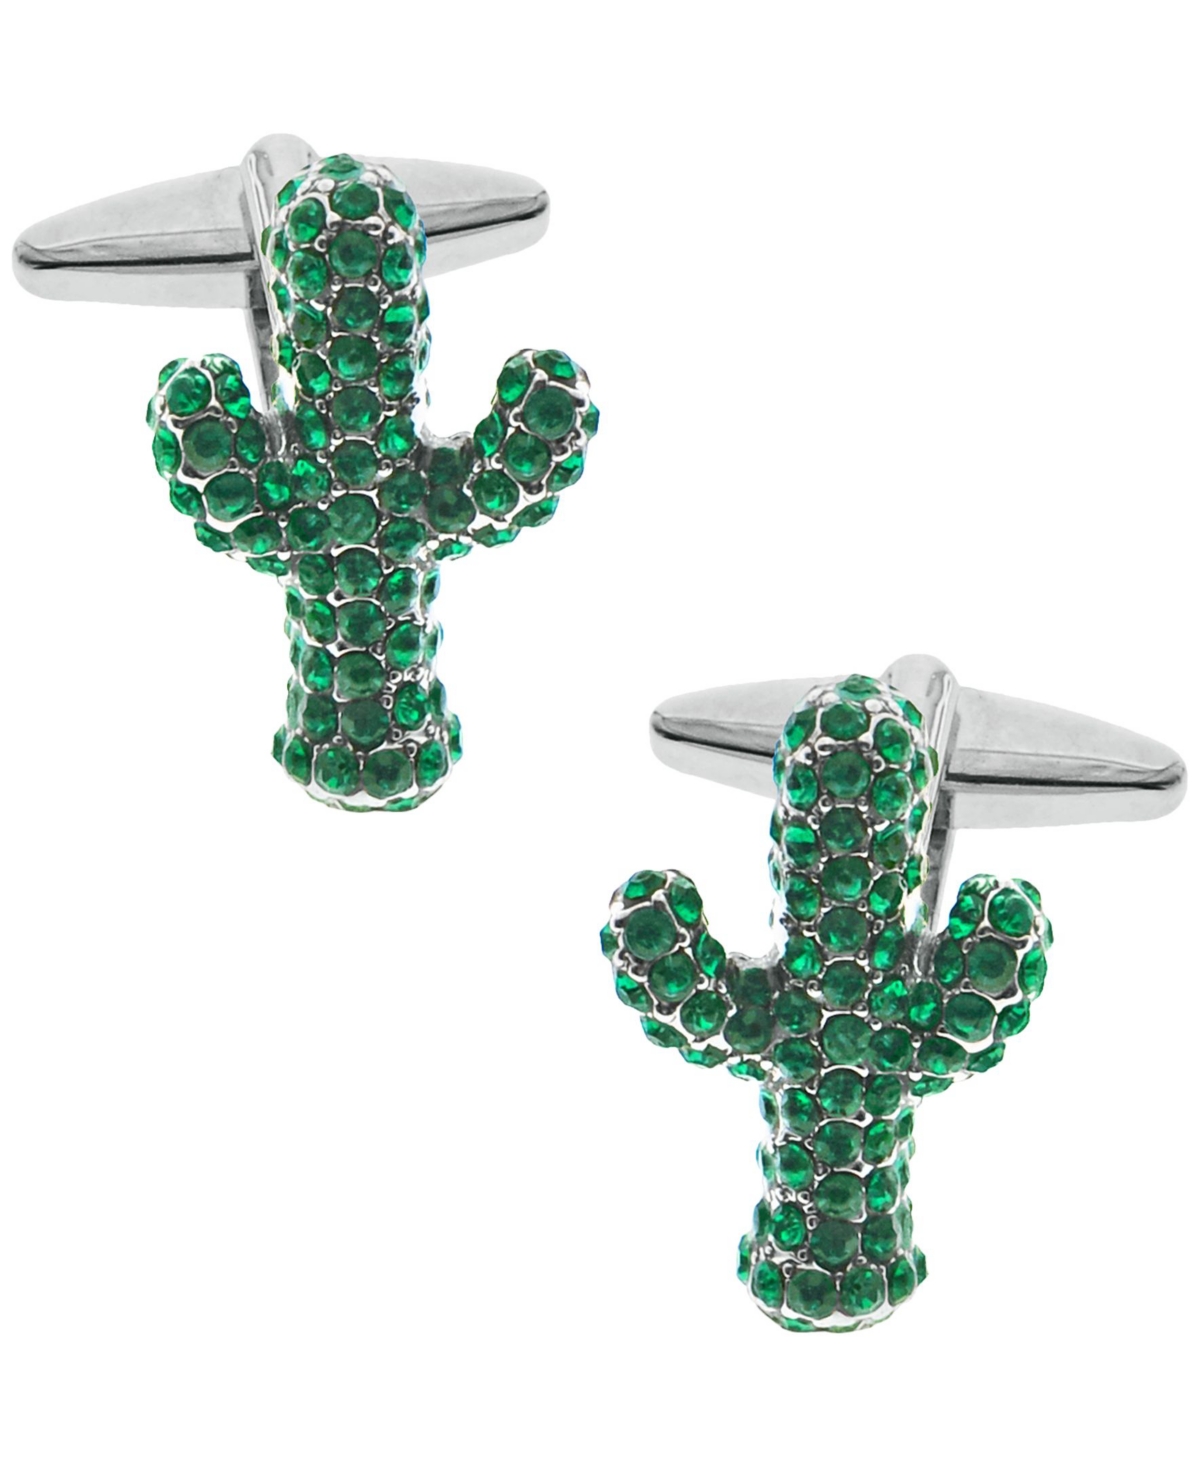 Sutton Silver-Tone Cubic Zirconia Cactus Cufflinks - Emerald